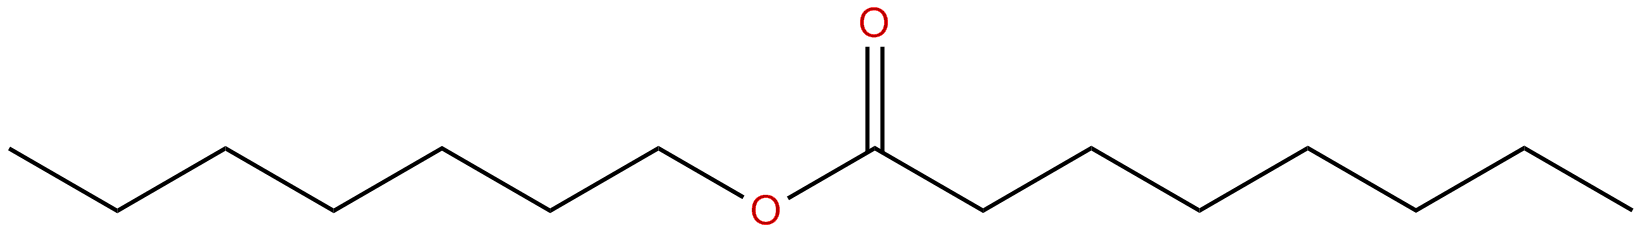 Image of heptyl octanoate